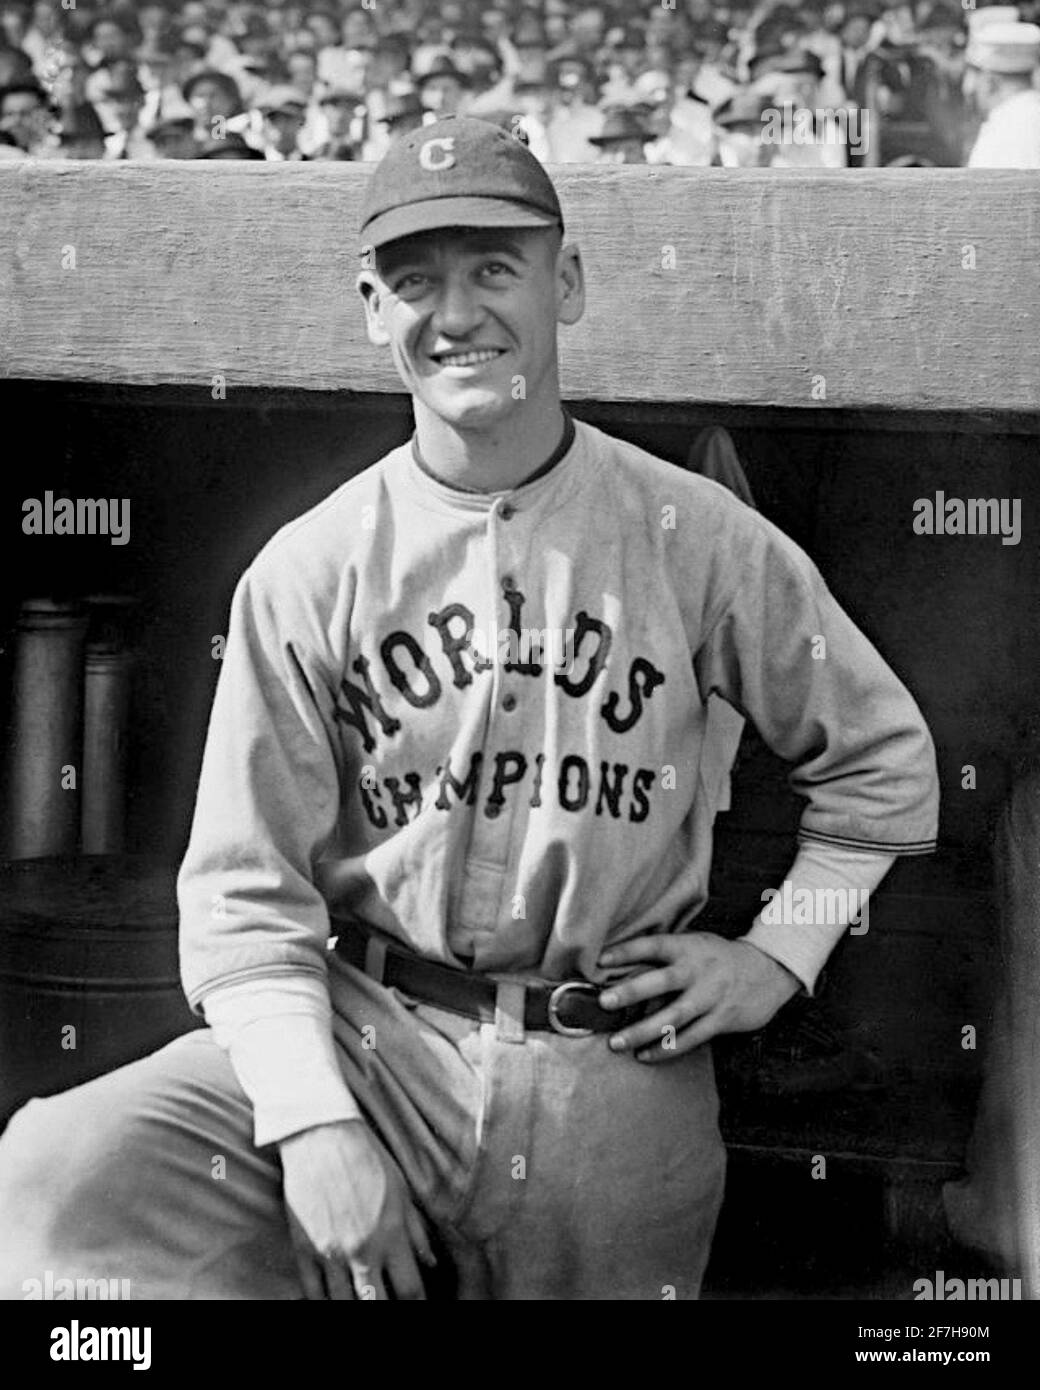 Joe Sewell Wearing A Uniform Celebrating The Cleveland Indians Winning Of  The 1920 World Series. History - Item # VAREVCHISL041EC124